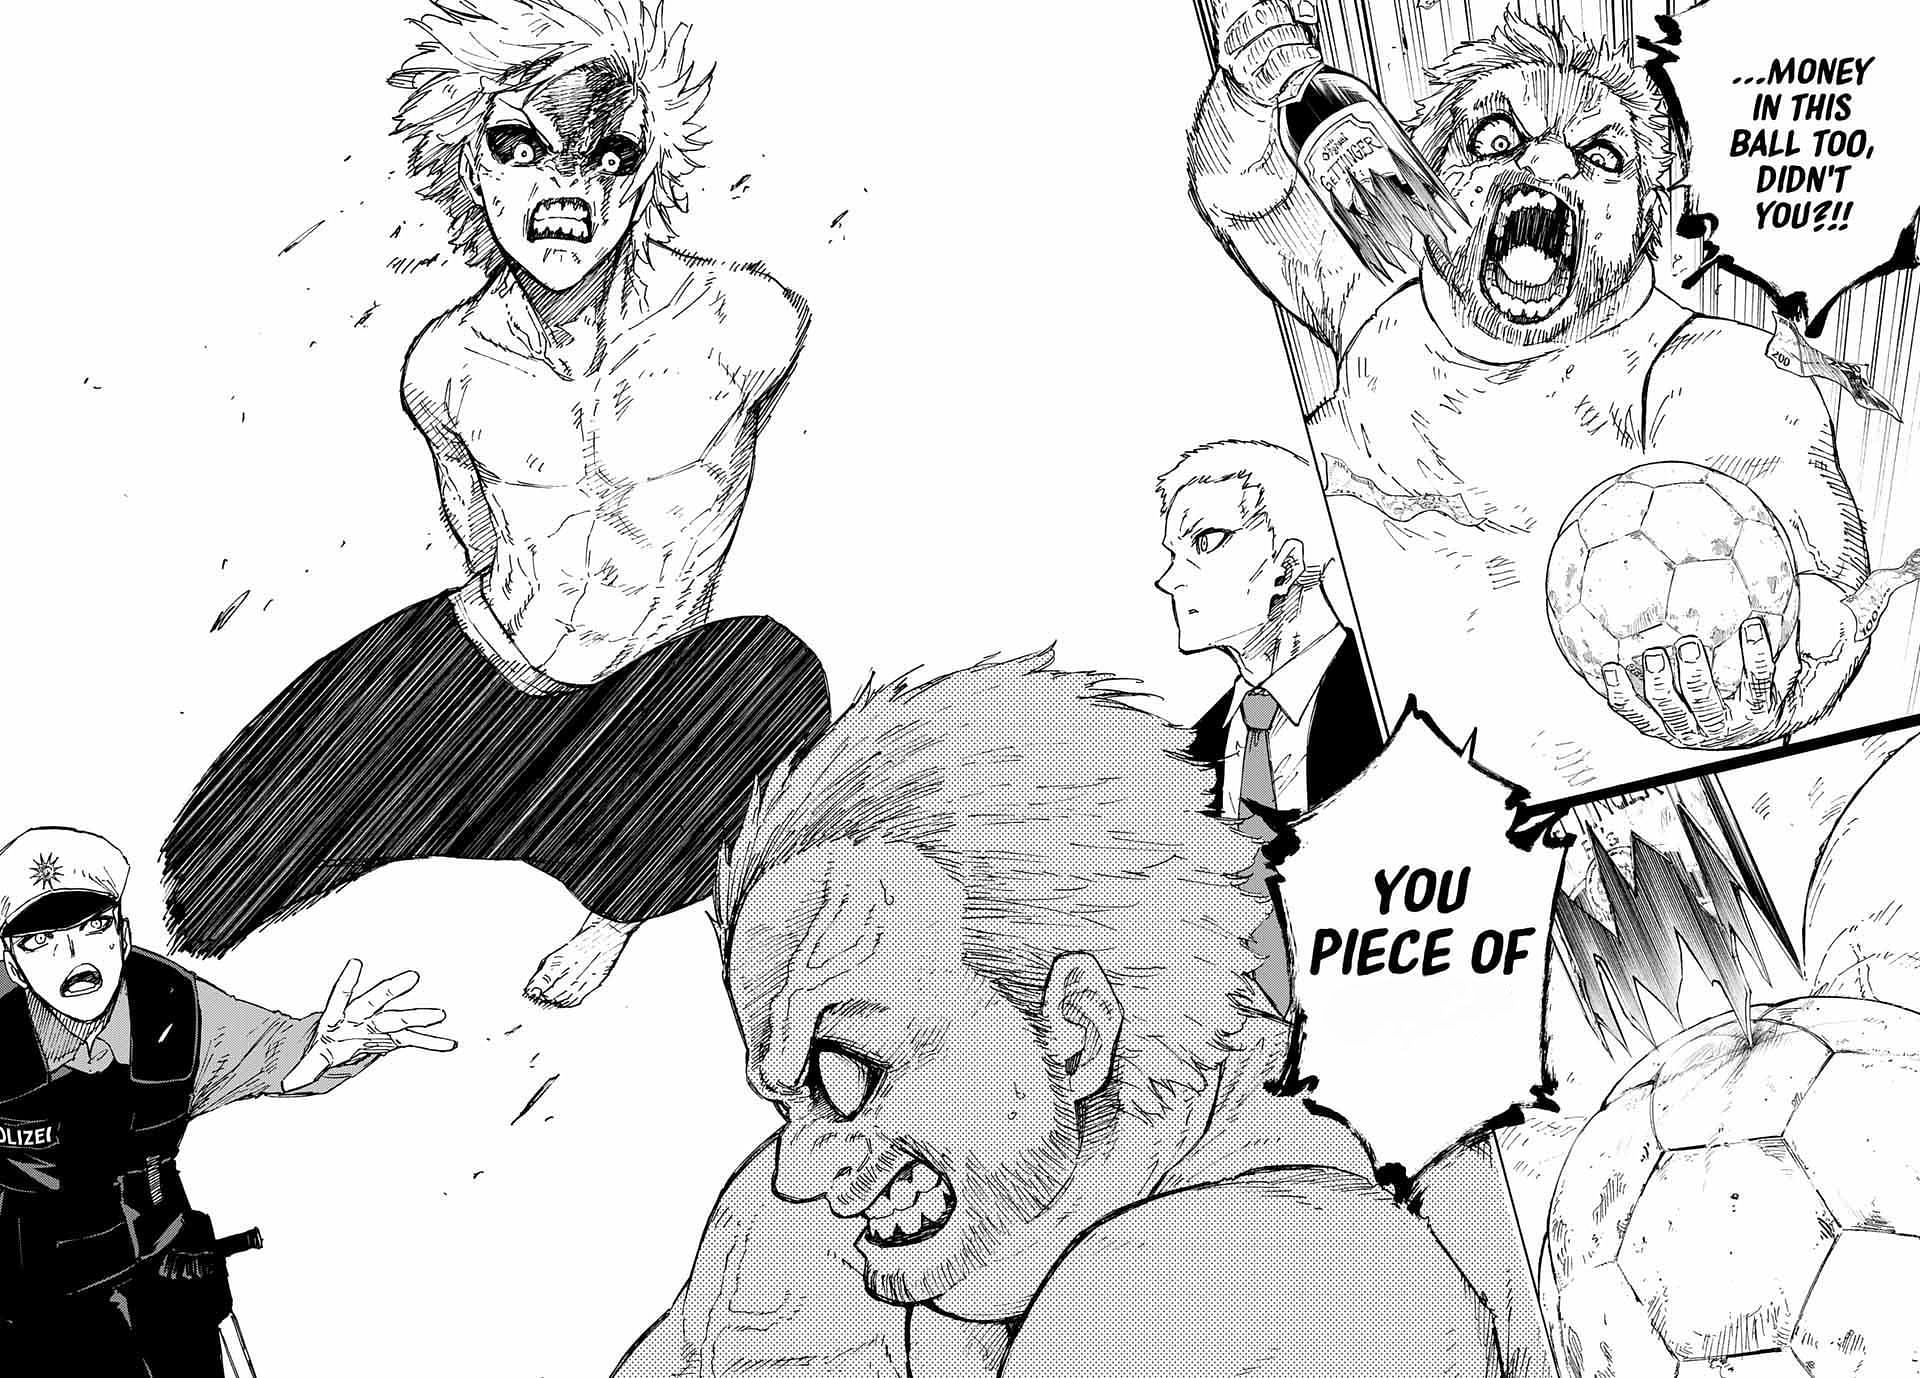 Michael Kaiser kicking his father in the manga (Image via Kodansha)